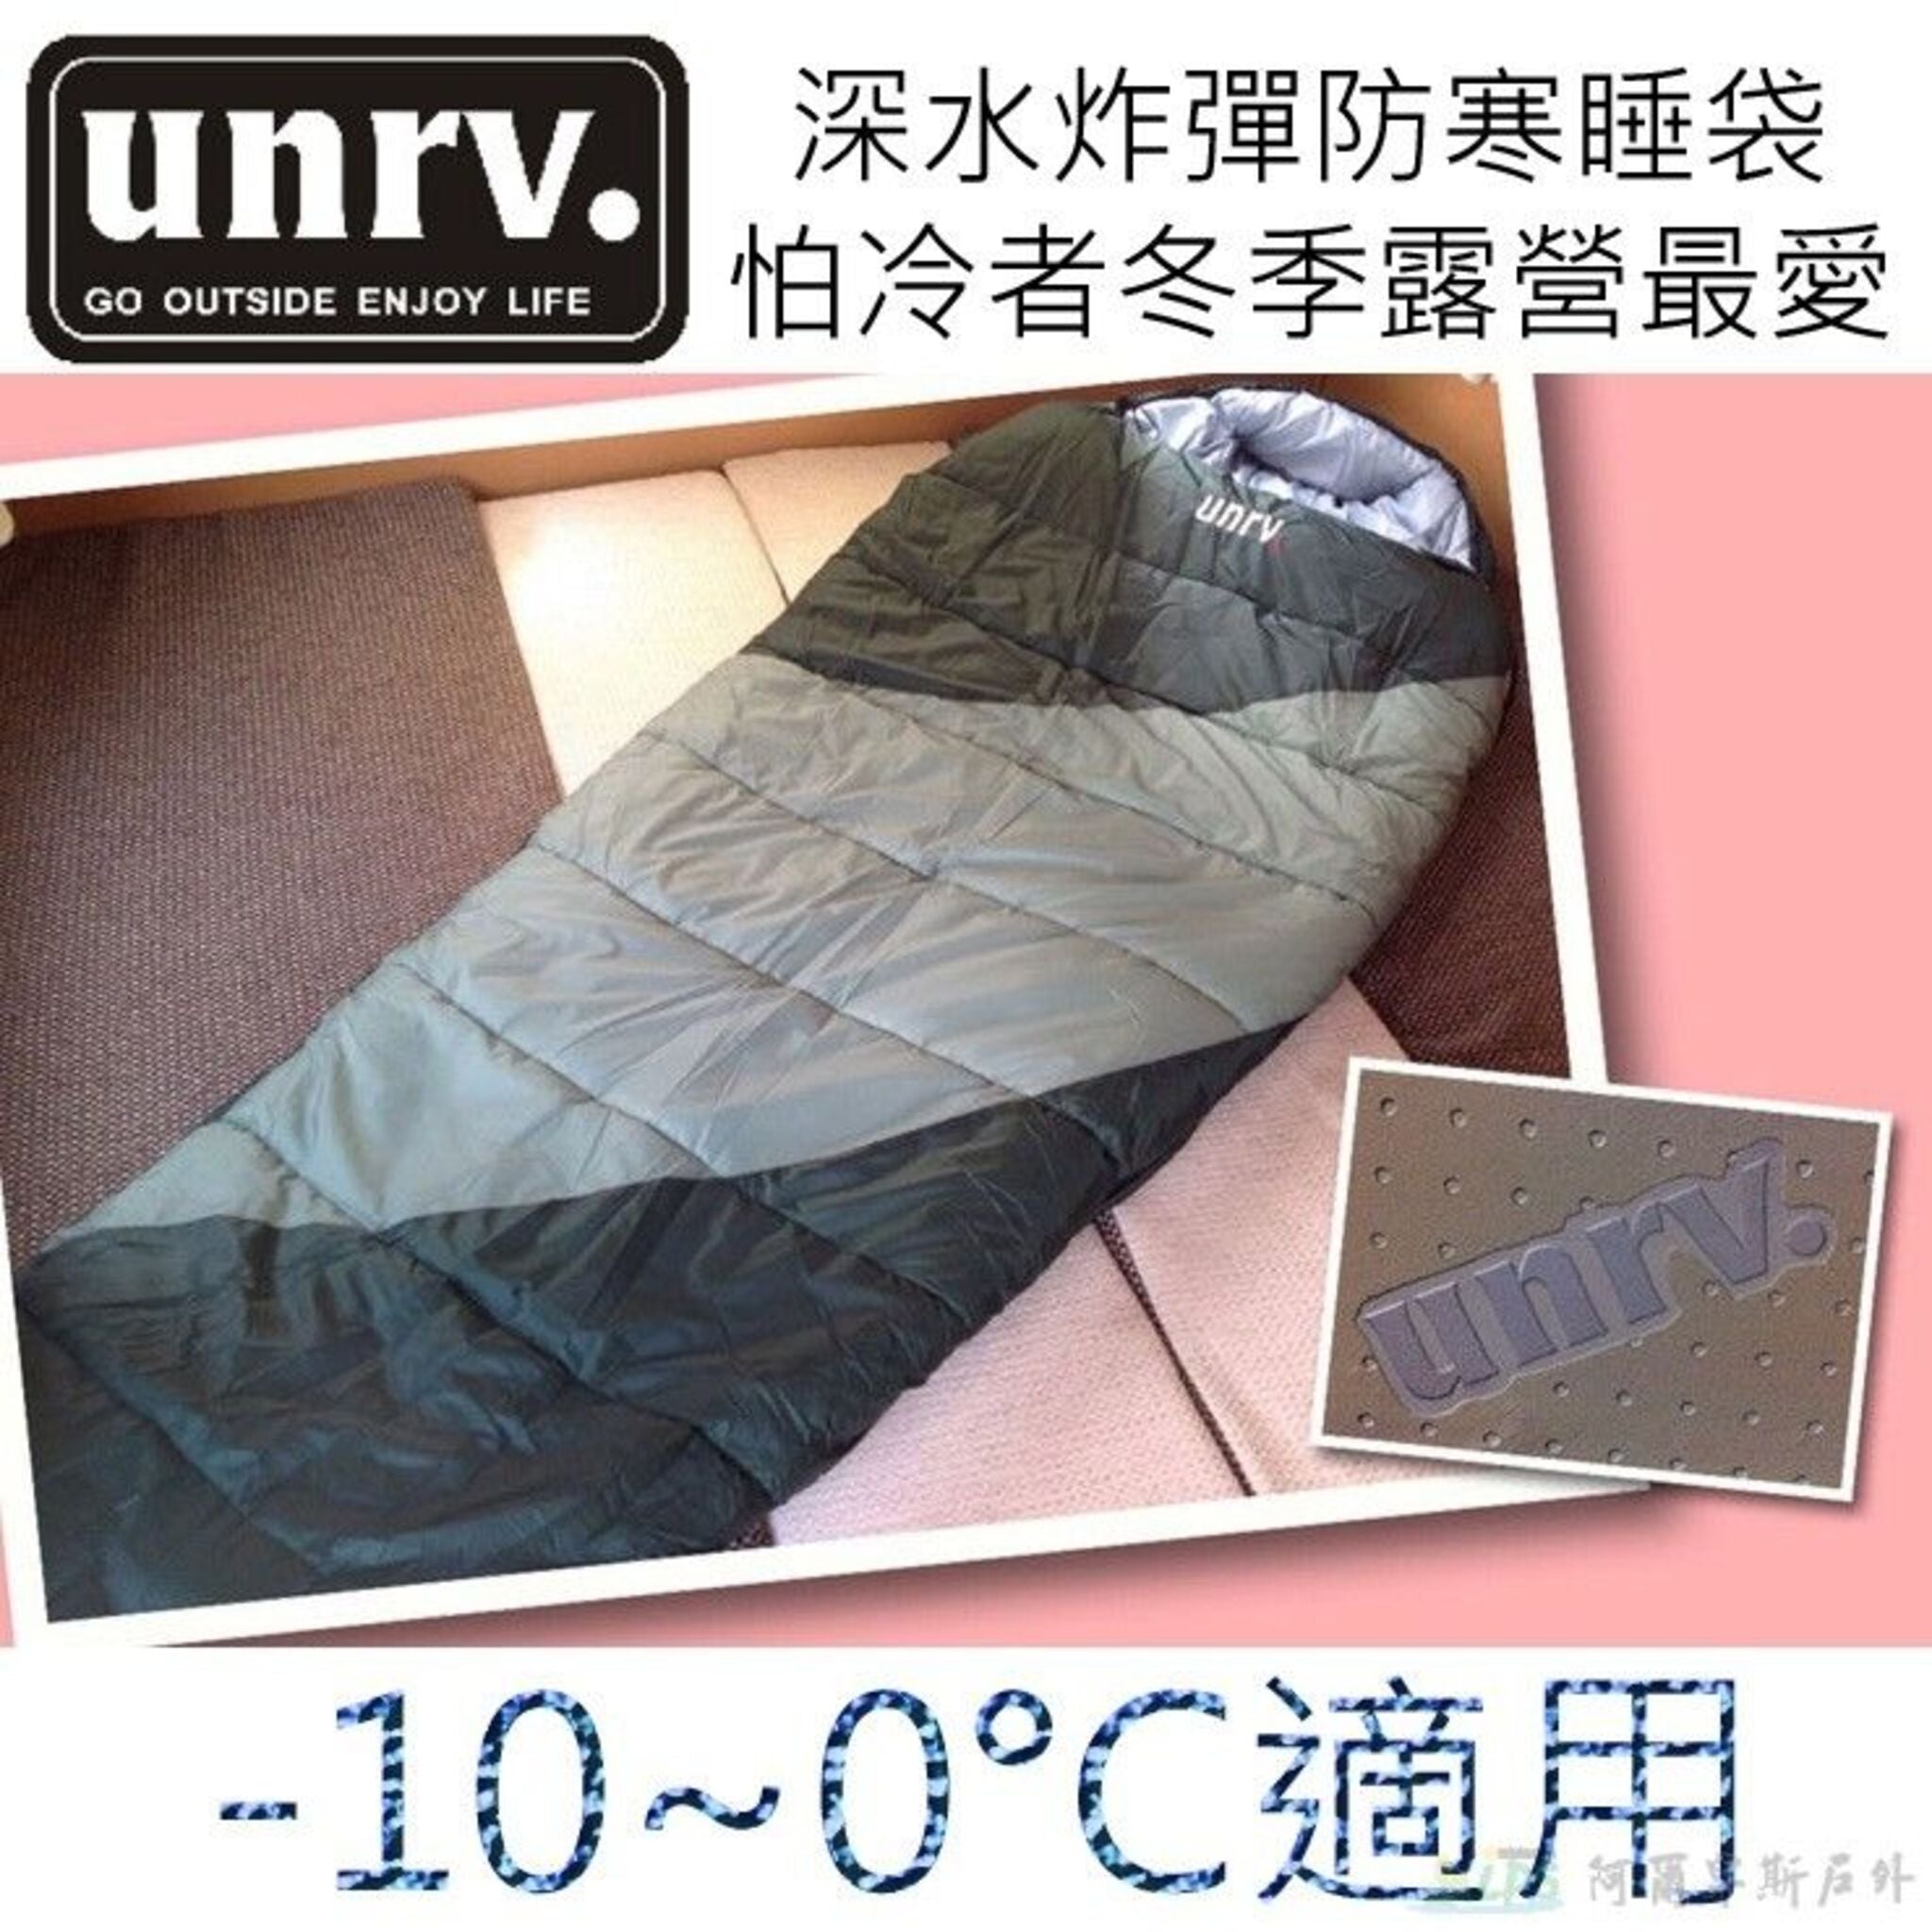 UNRV 深水炸彈睡袋 適溫-10~0°C AS082-RV